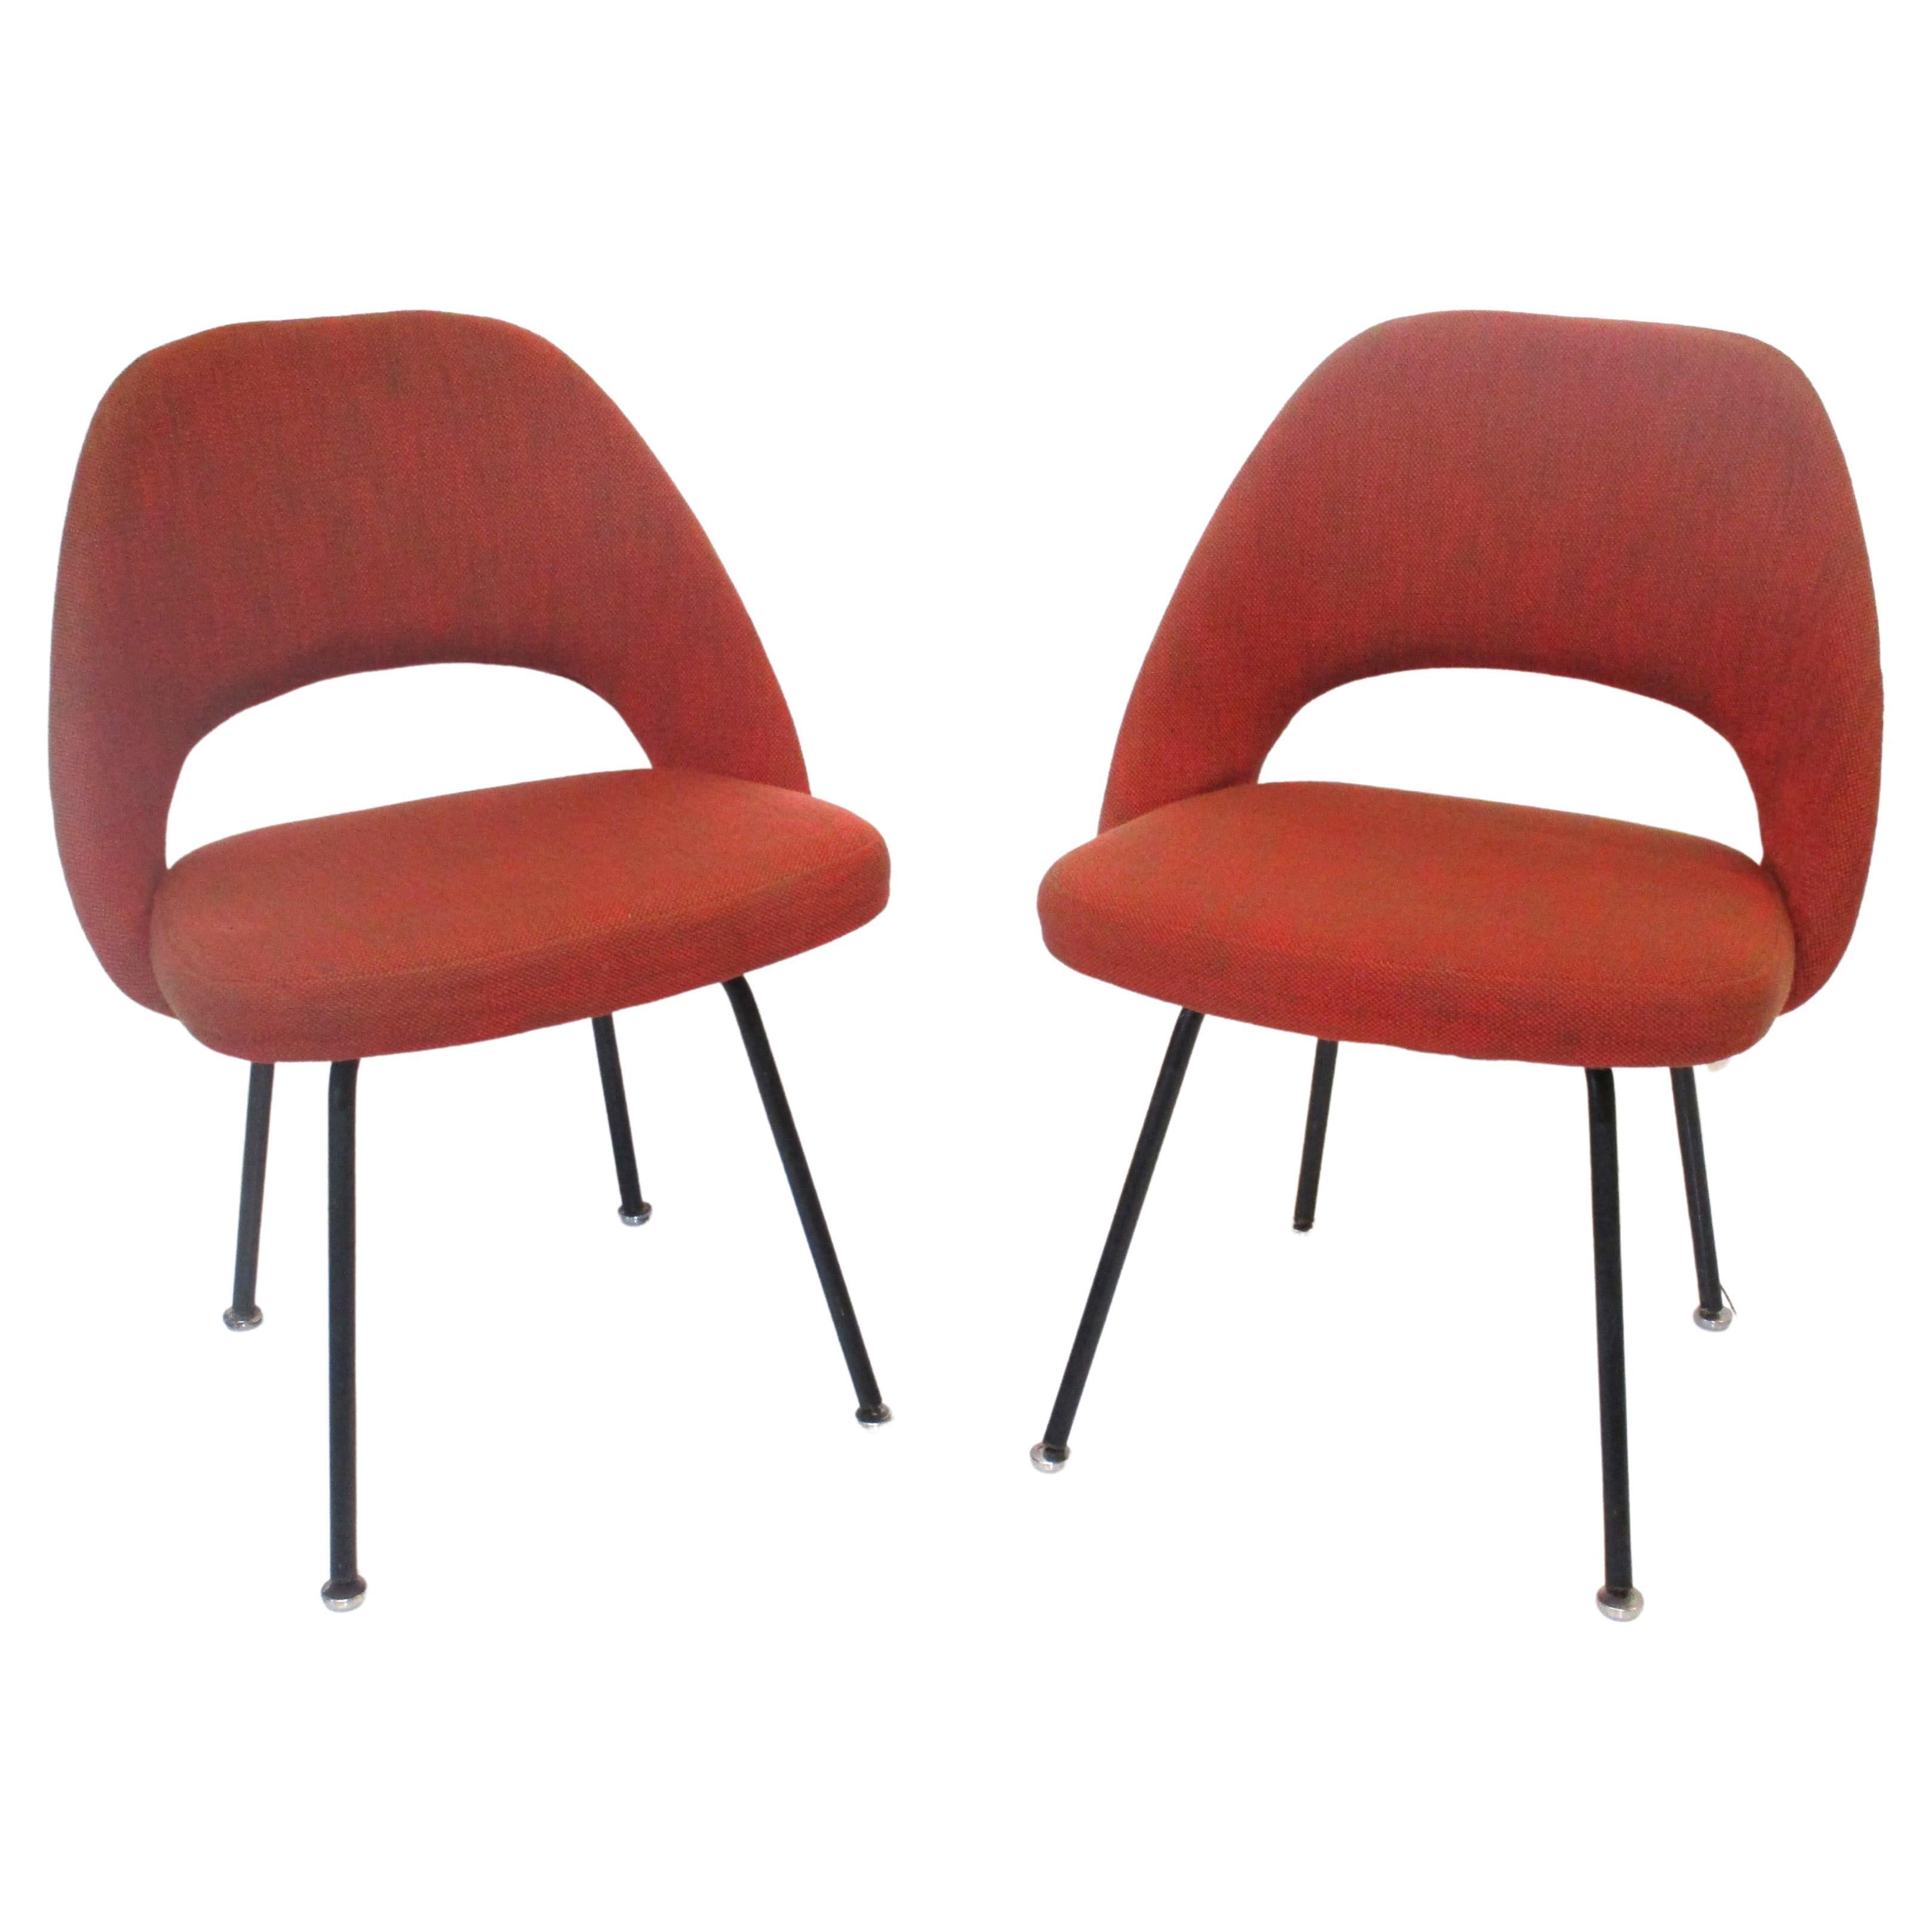 Knoll Upholstered Executive Chairs by Eero Saarinen